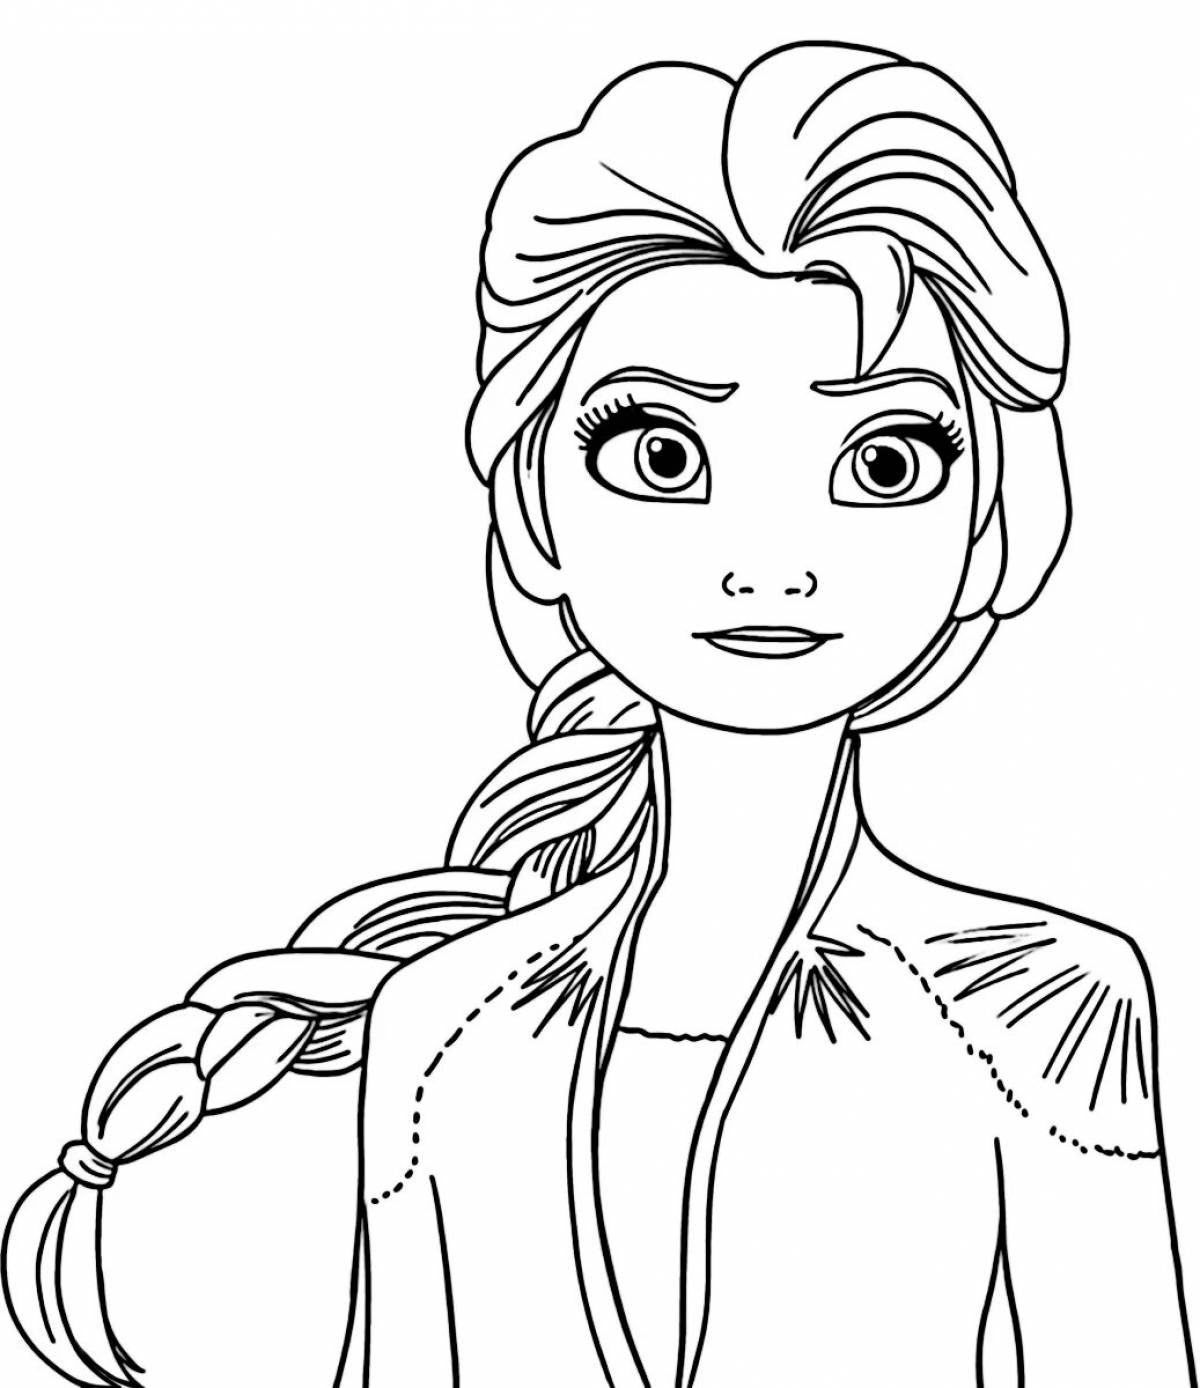 Elsa drawing #10